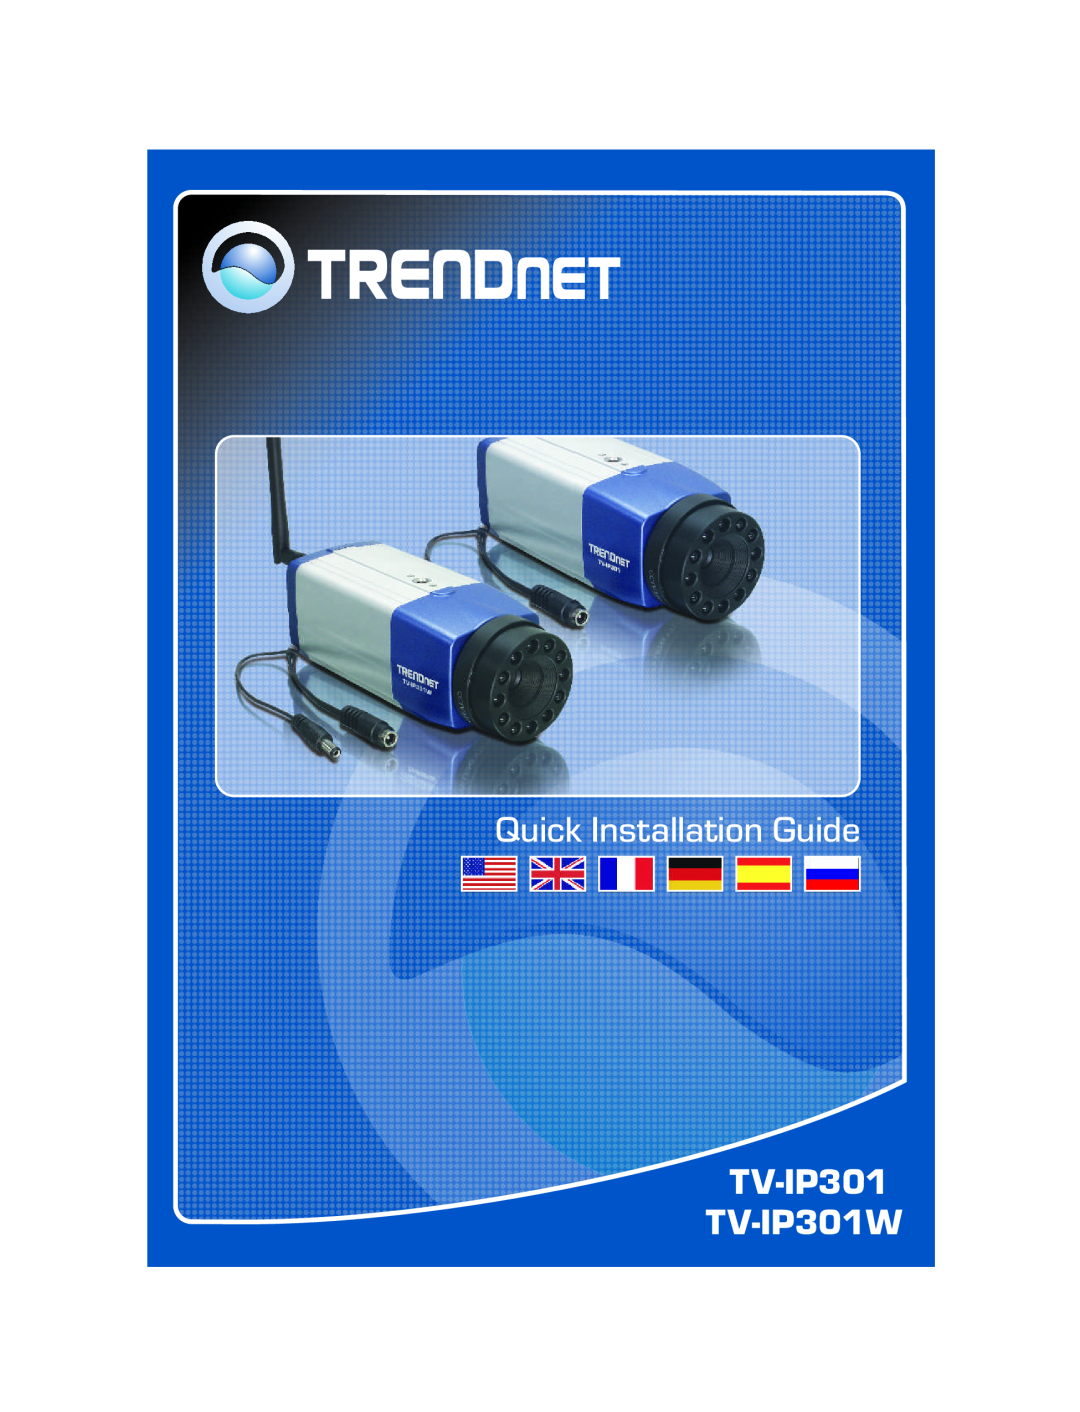 TRENDnet TRENDNET manual Quick Installation Guide, TV-IP212/TV-IP212W TV-IP312/TV-IP312W 